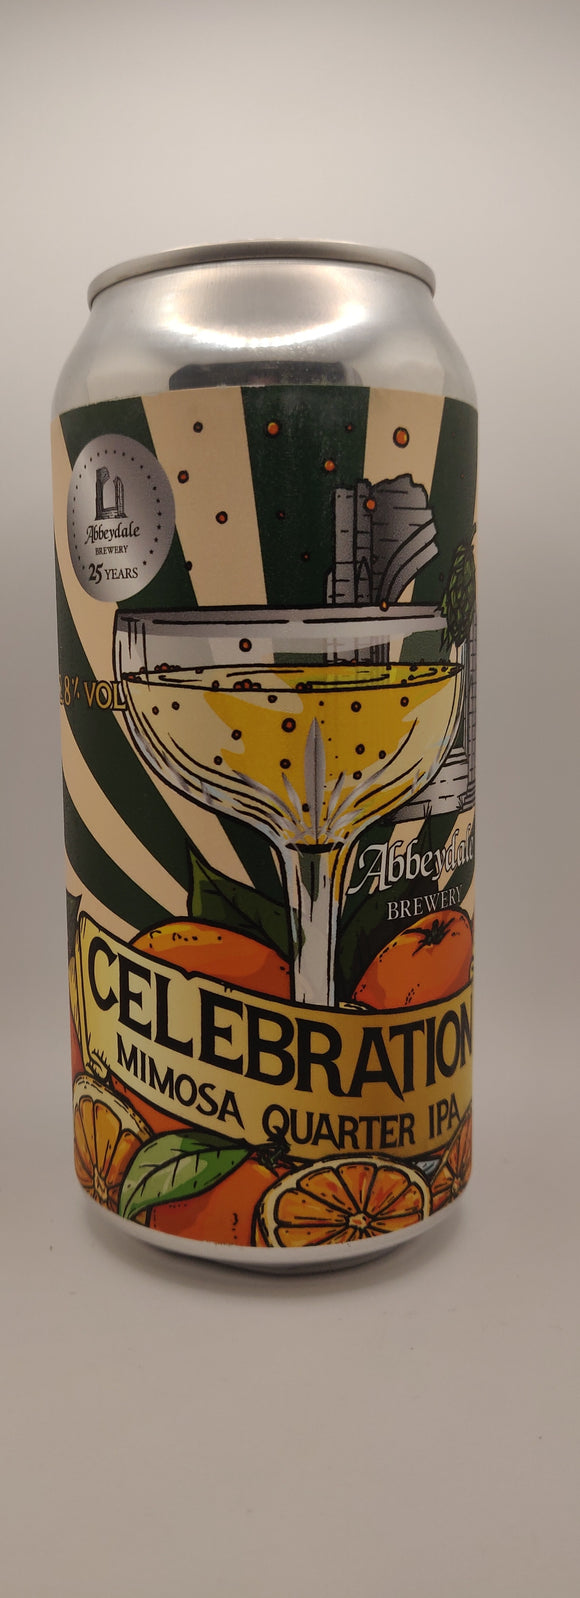 Abbeydale - Celebration (Mimosa)